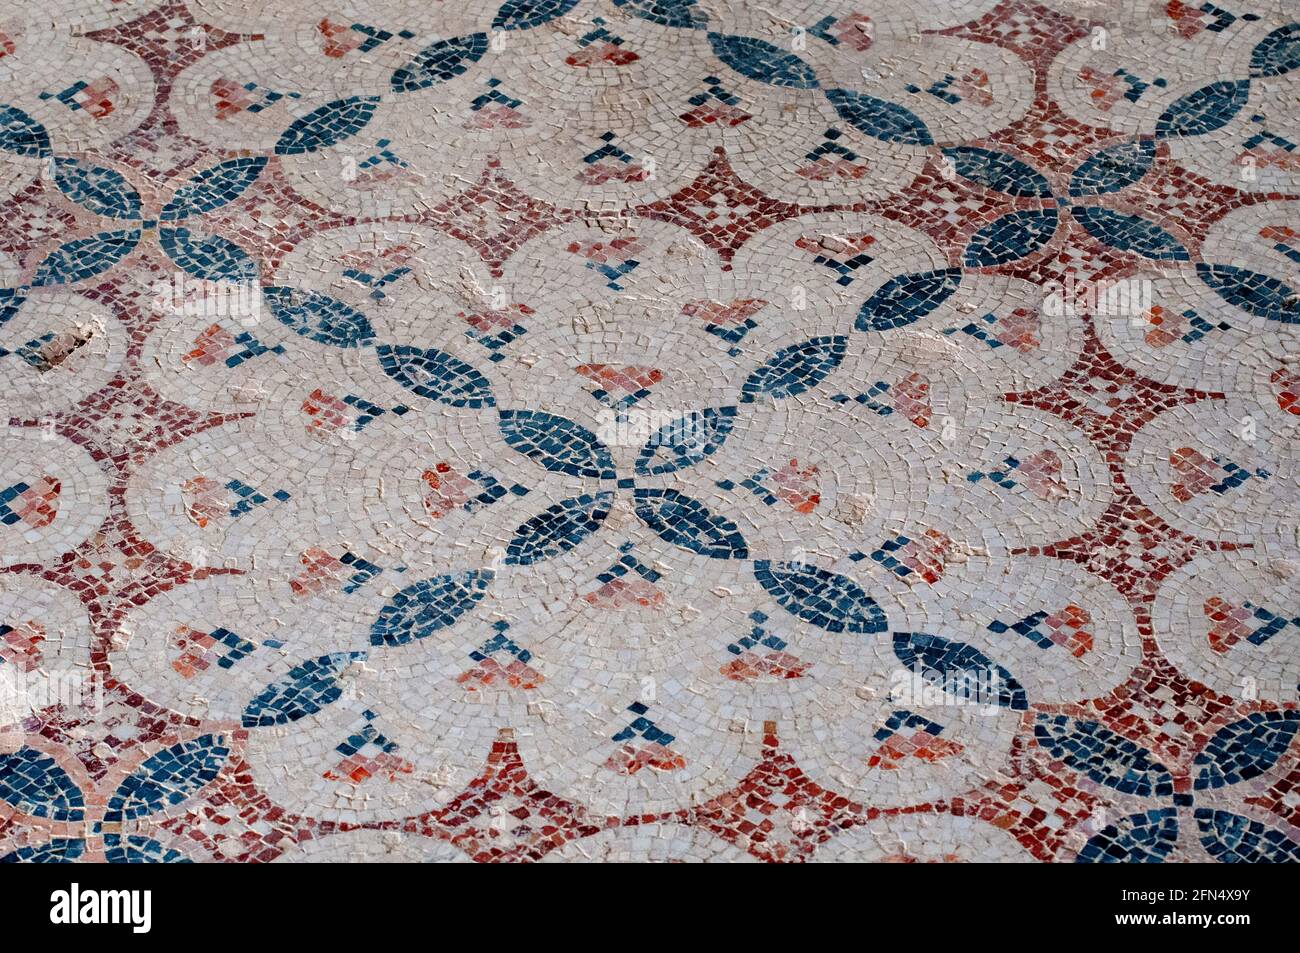 Geometric mosaic floor design in the Nile House at Zippori National Park The city of Zippori (Sepphoris) A Roman Byzantine period city with an abundan Stock Photo